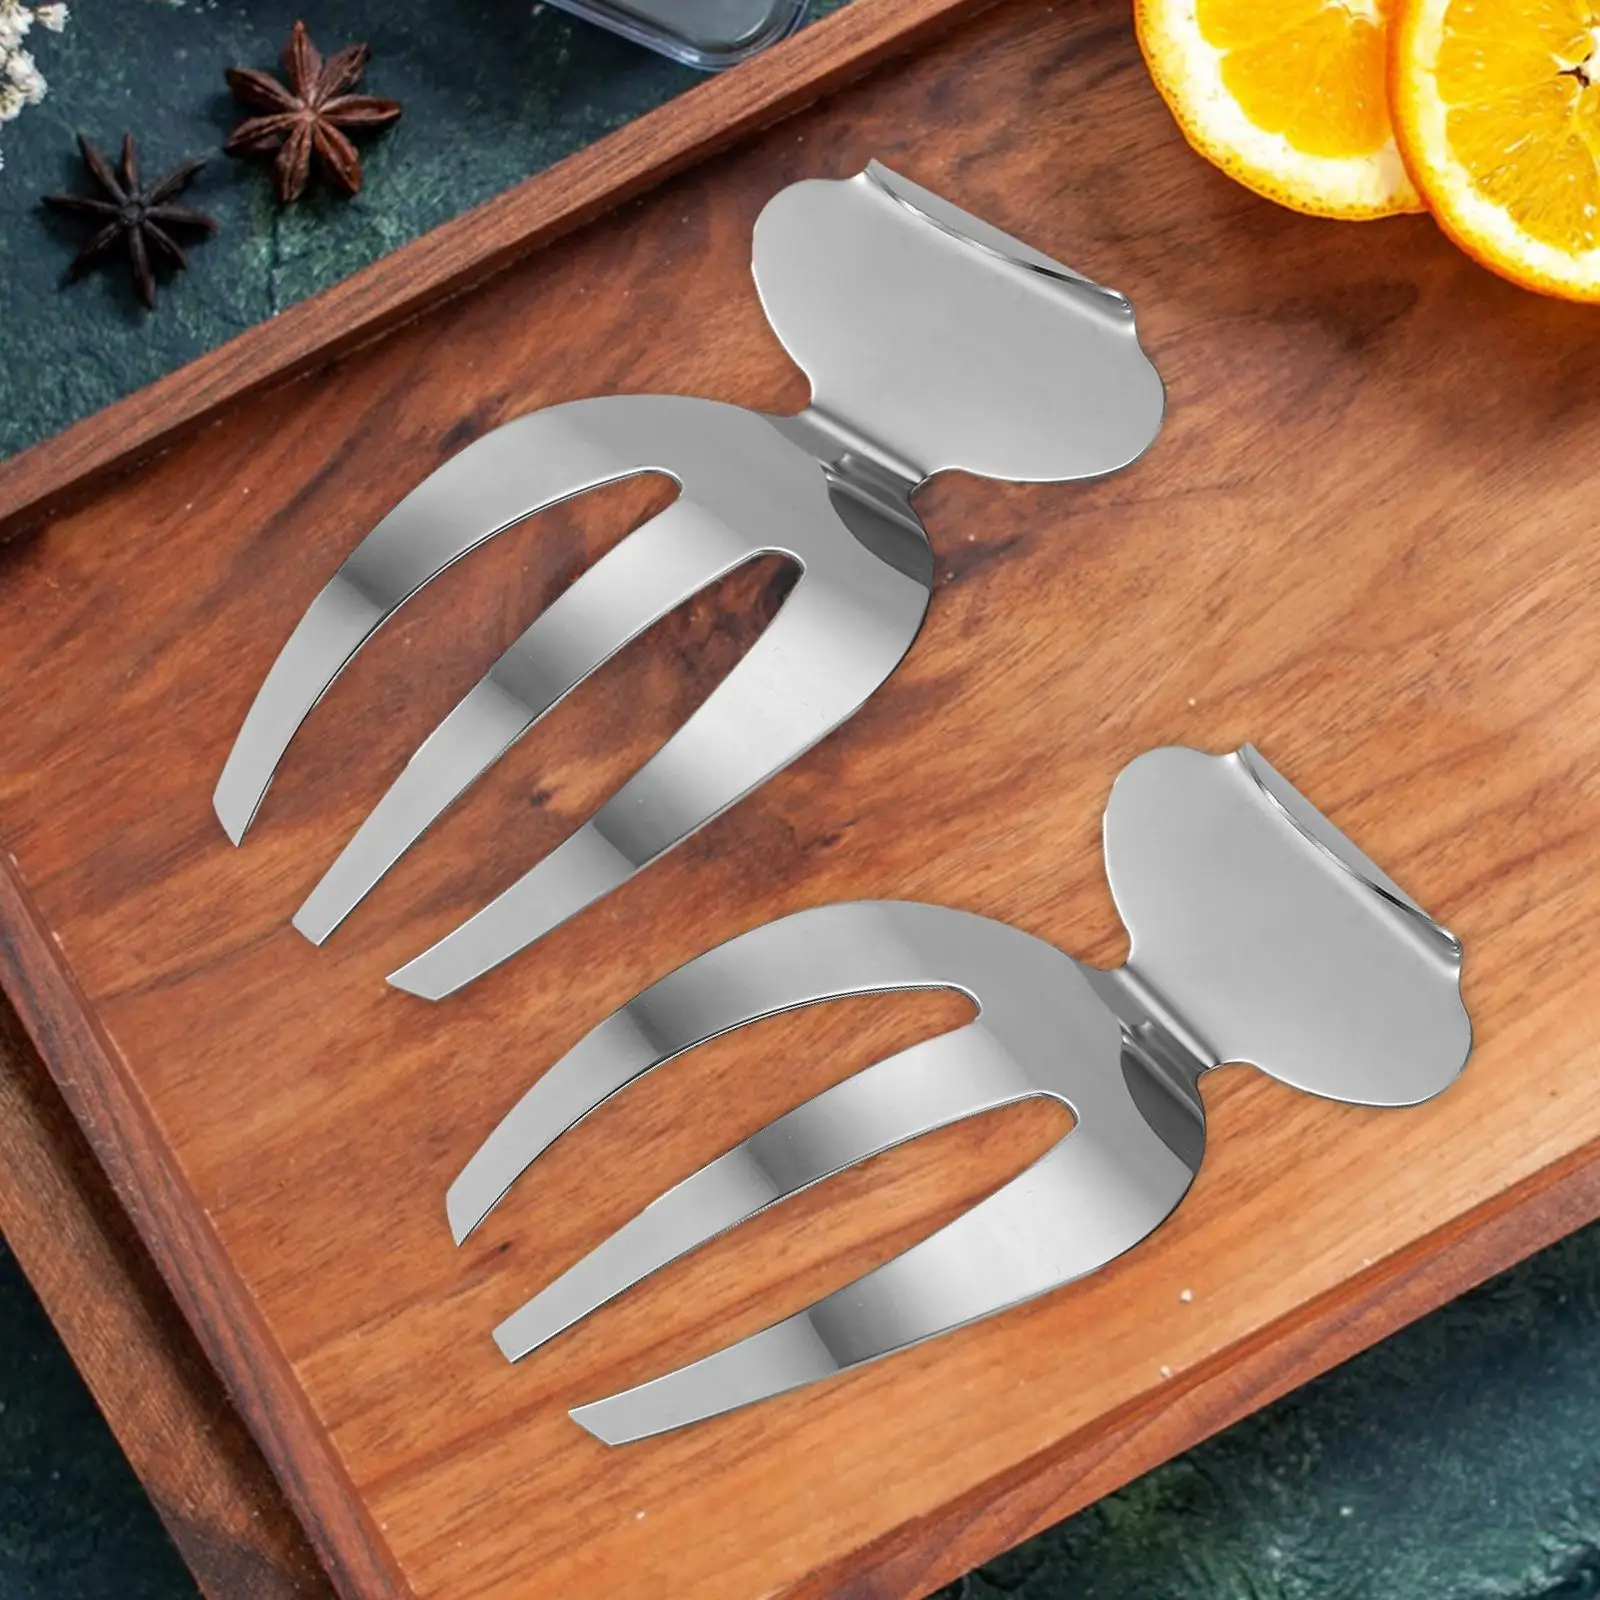 2x Stainless Steel Salad Hands Salad Tools Metal Kitchen Utensils Tossing Tools Serving Utensils for Serving Salad Fruit